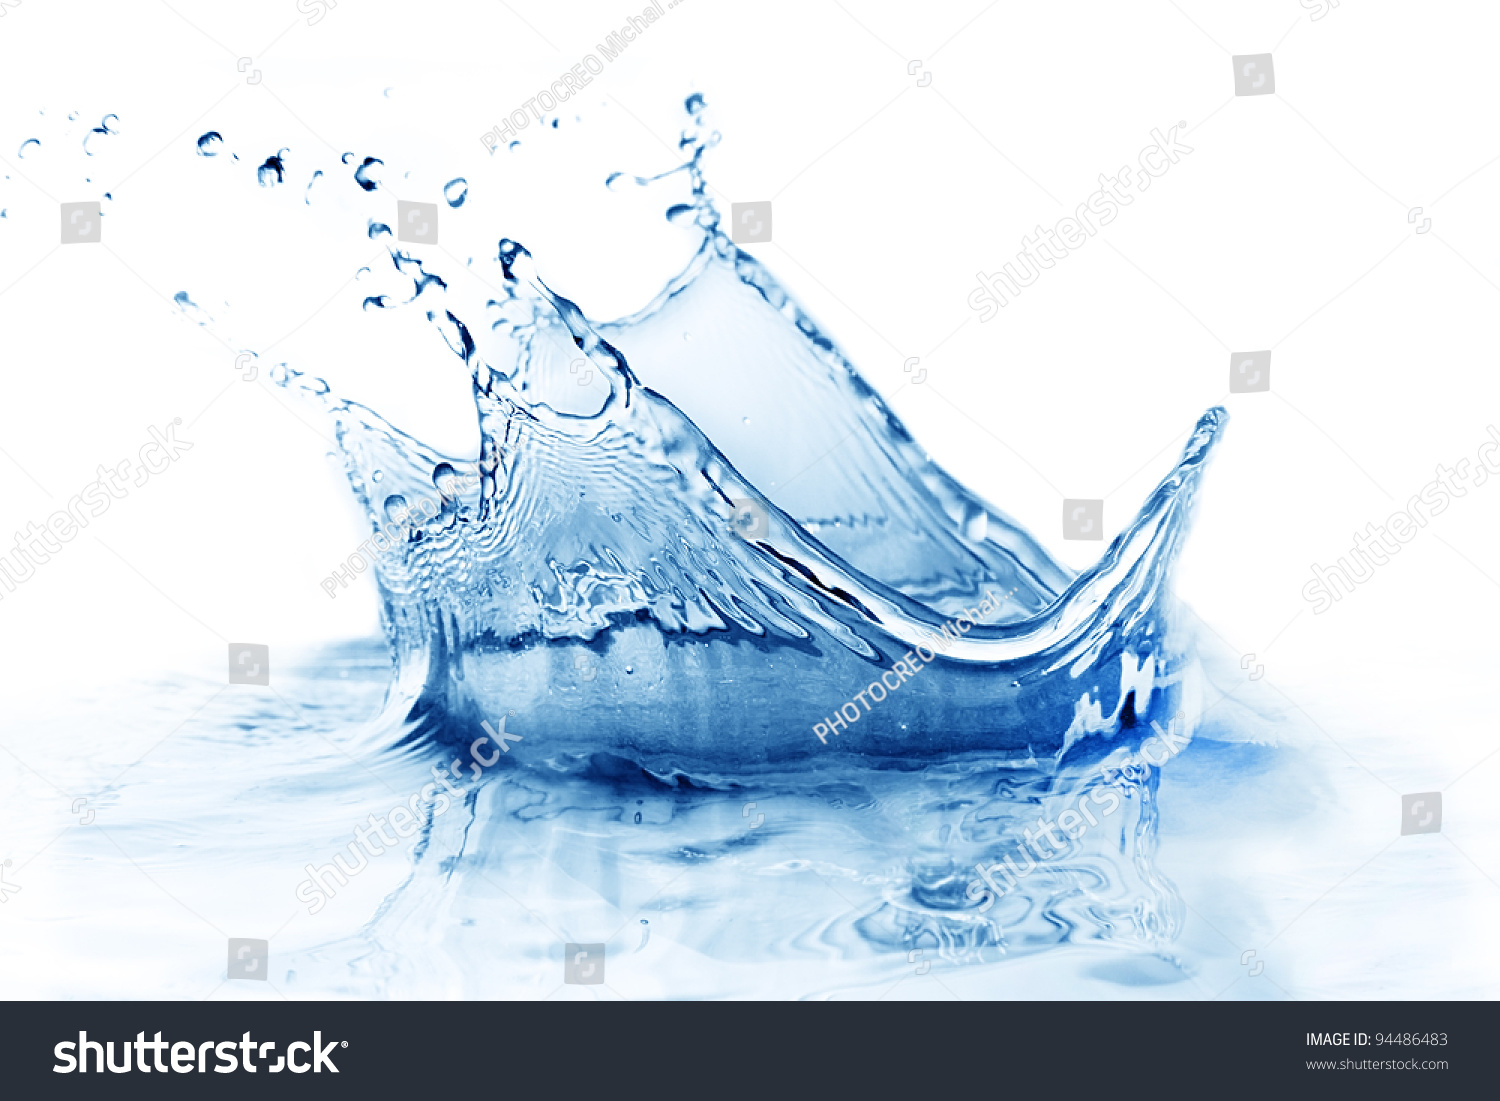 Fresh clean water splash in blue. #94486483